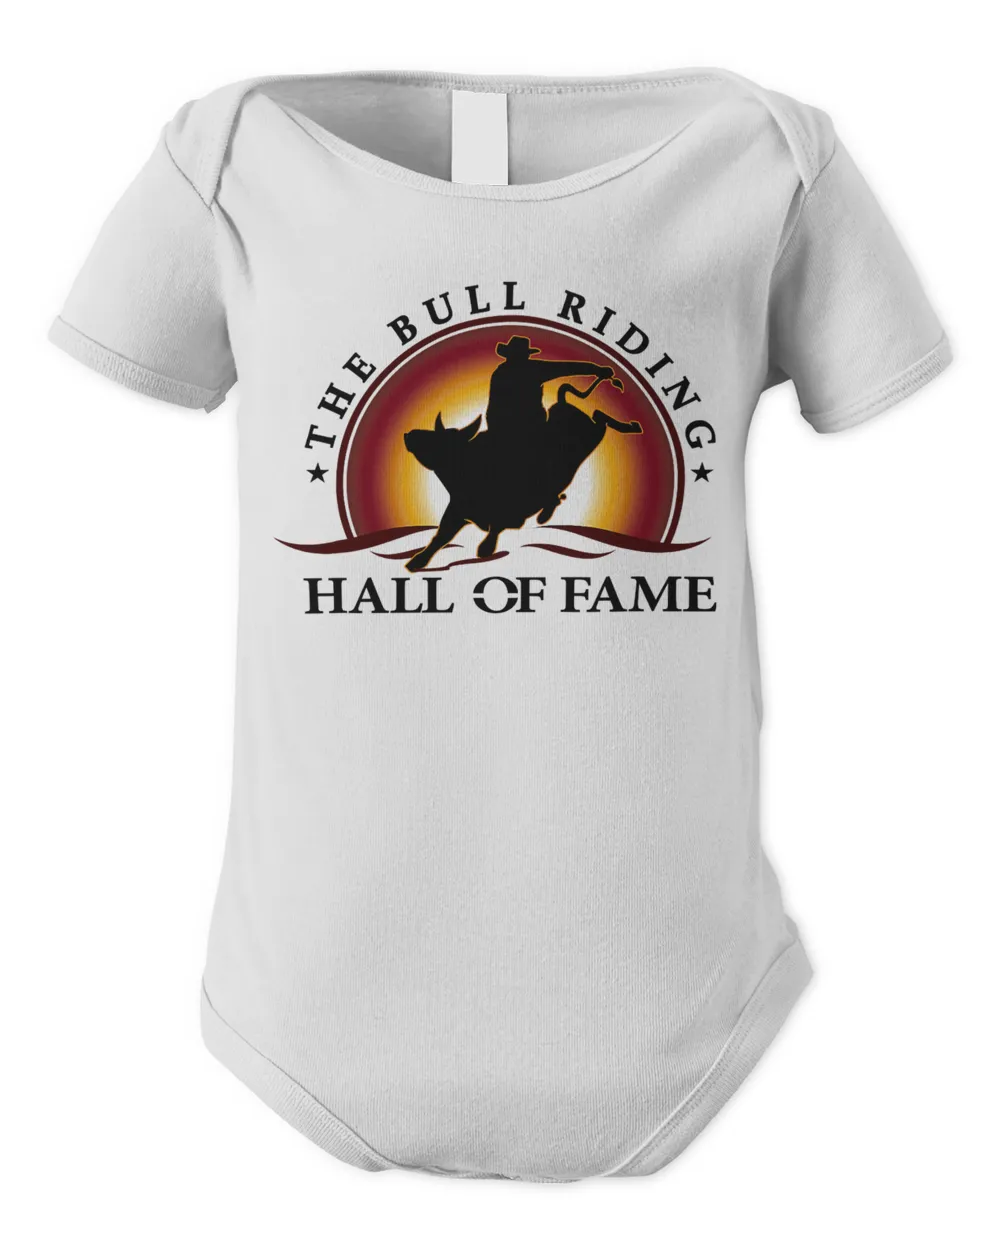 The Bull Riding Hall of Fame (TM) Tshirts